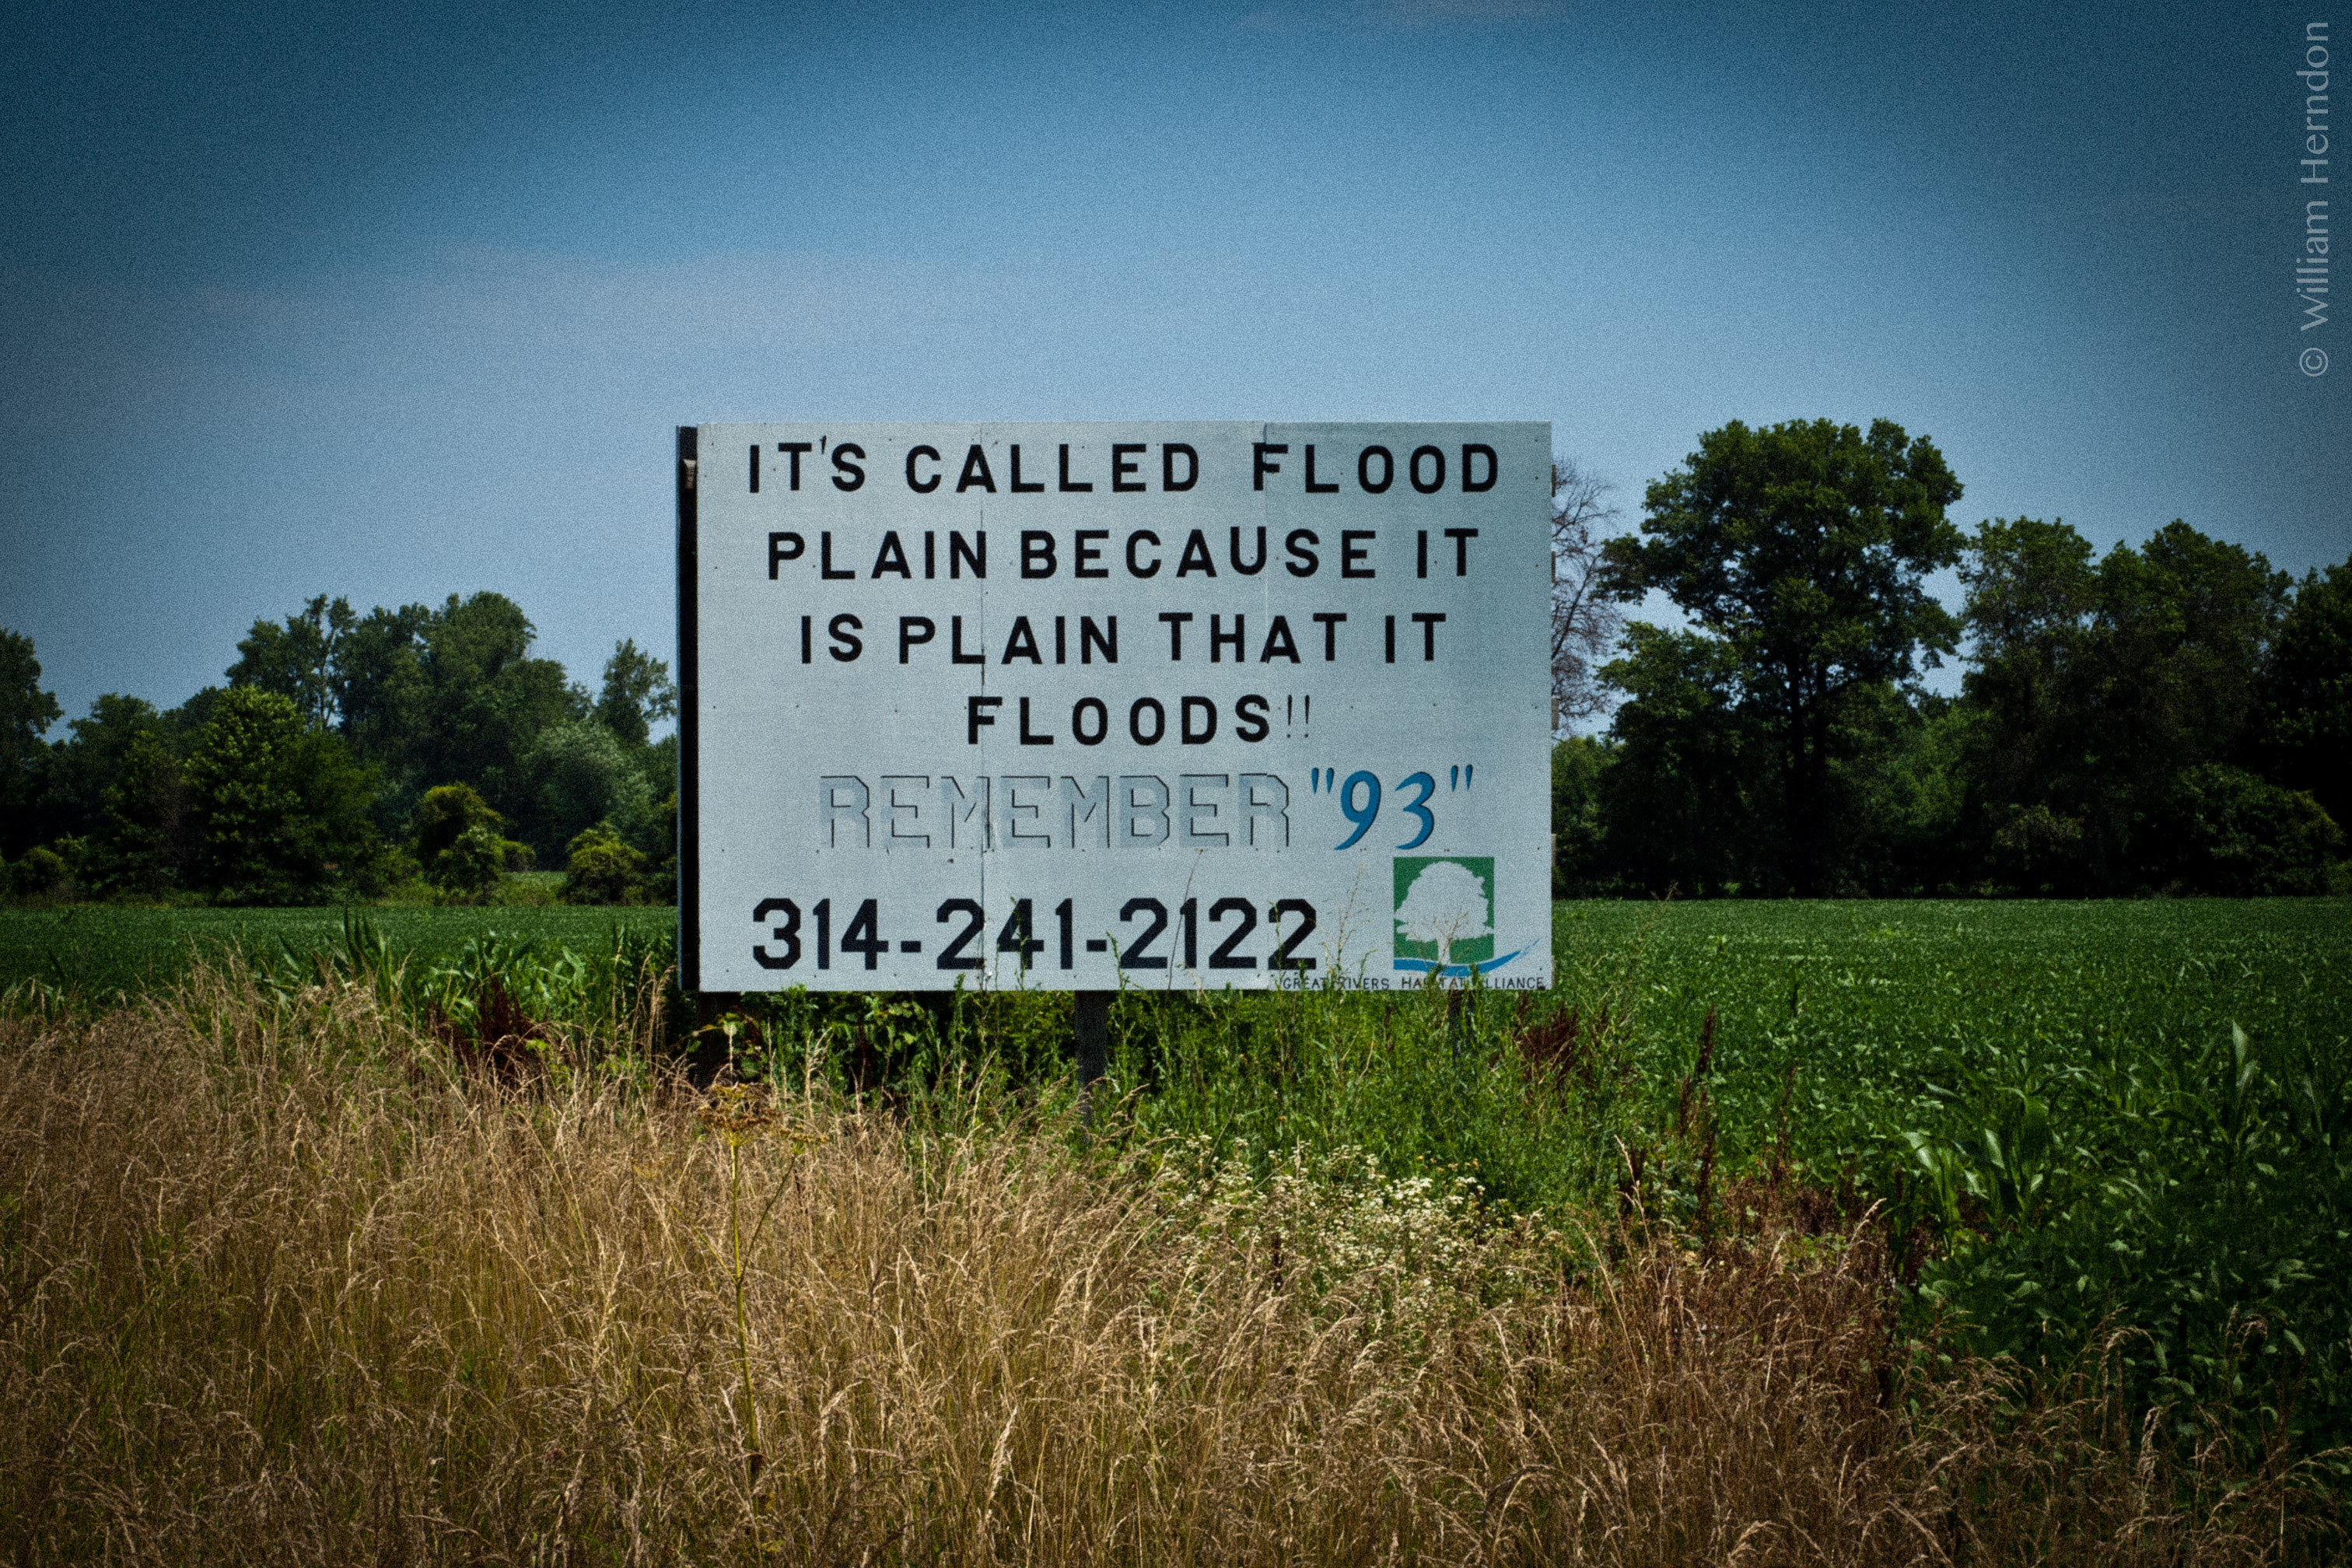 Flood Plain